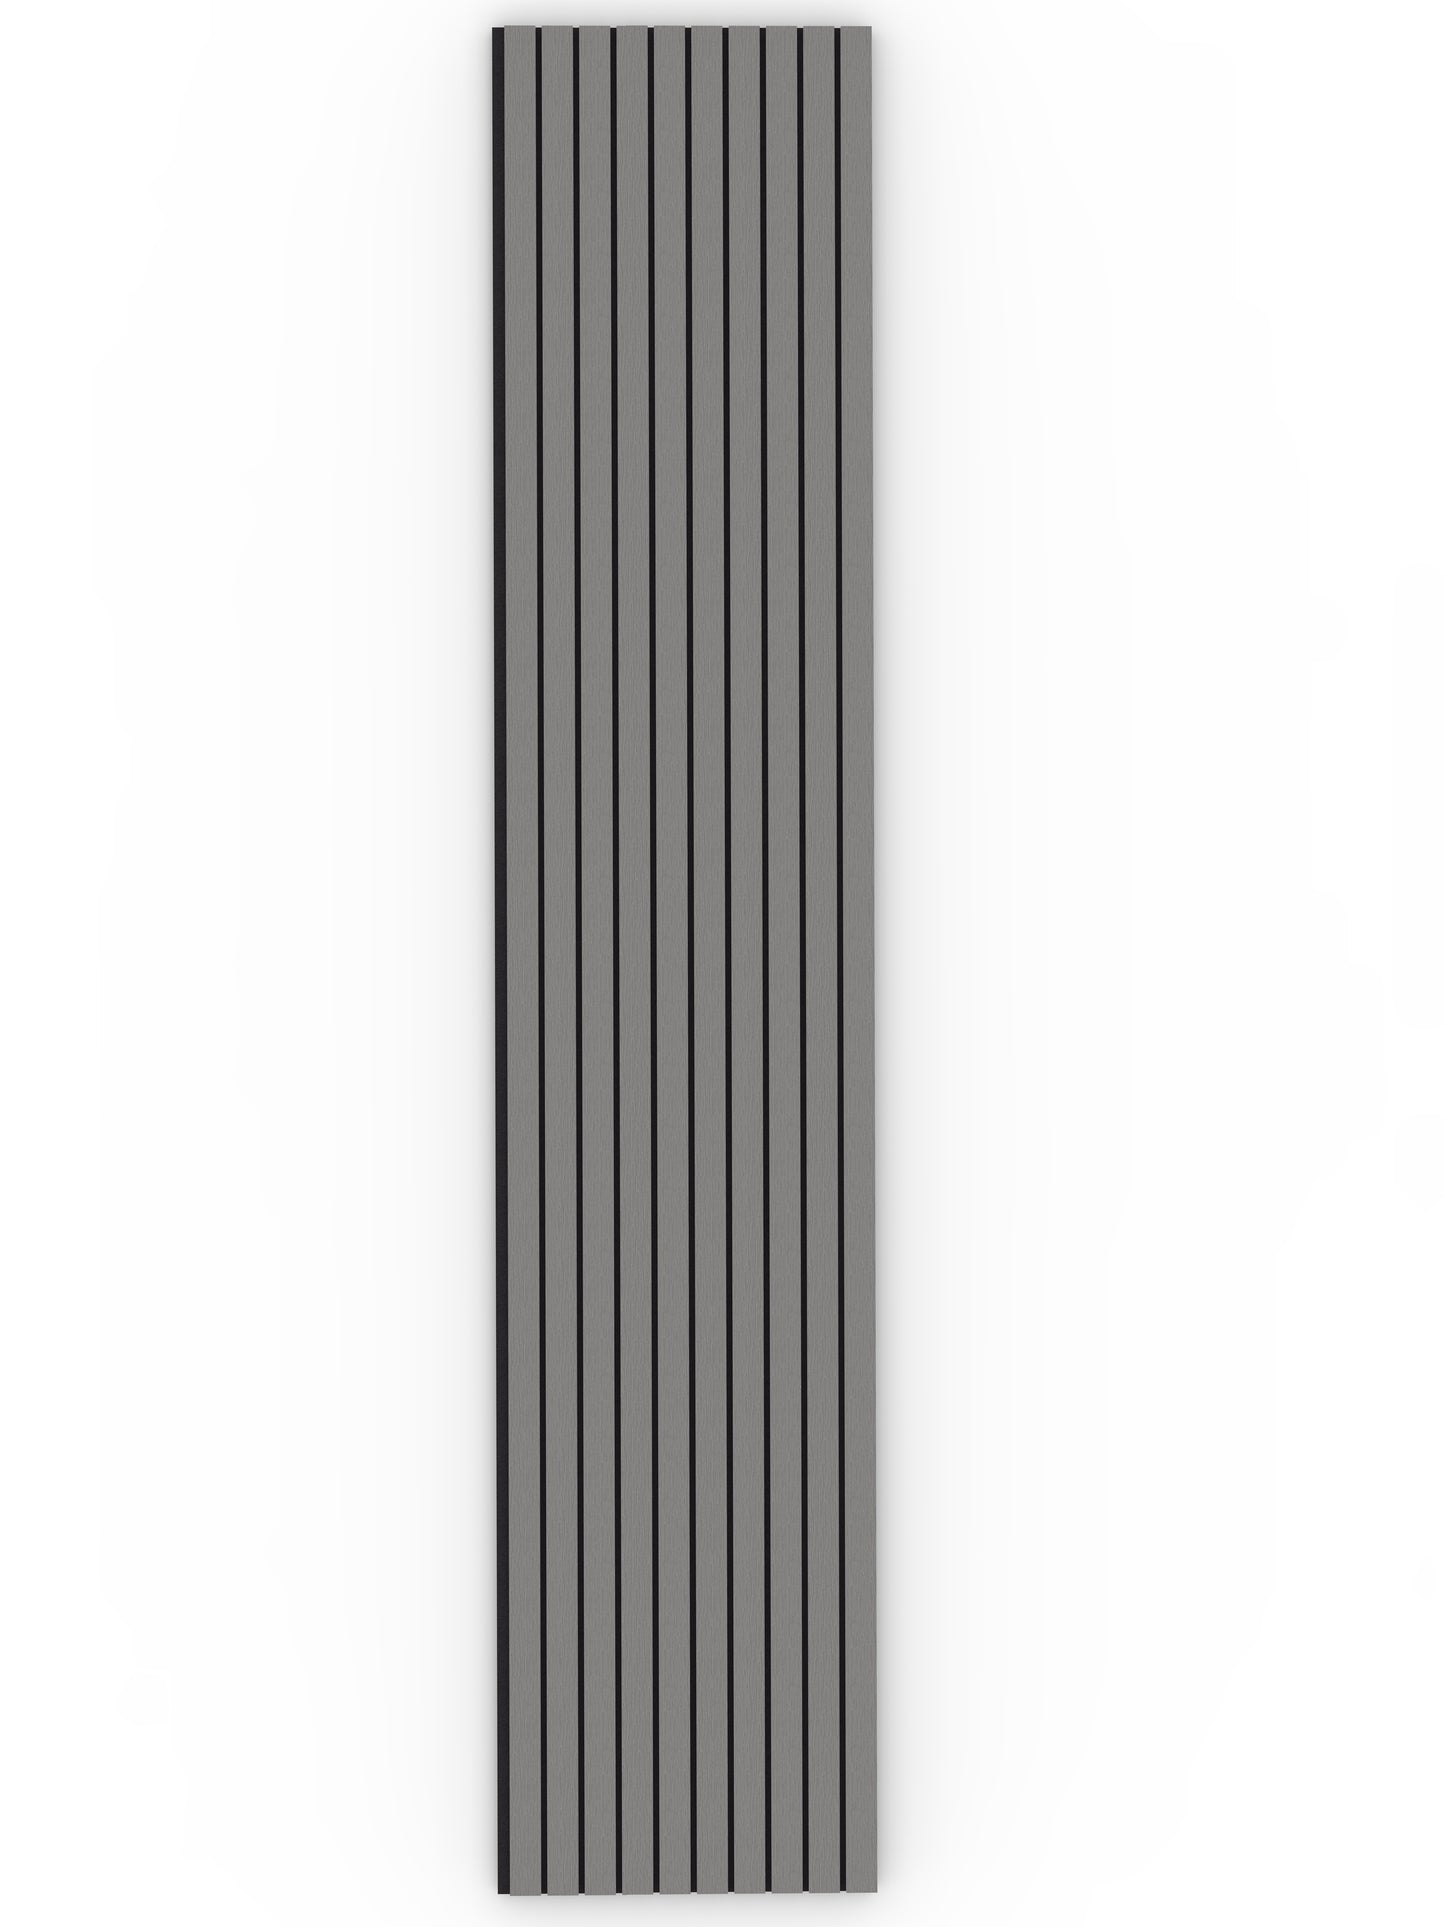 Grey Acoustic Wood Wall Panel Wide Slat Series 2 - 240x60cm